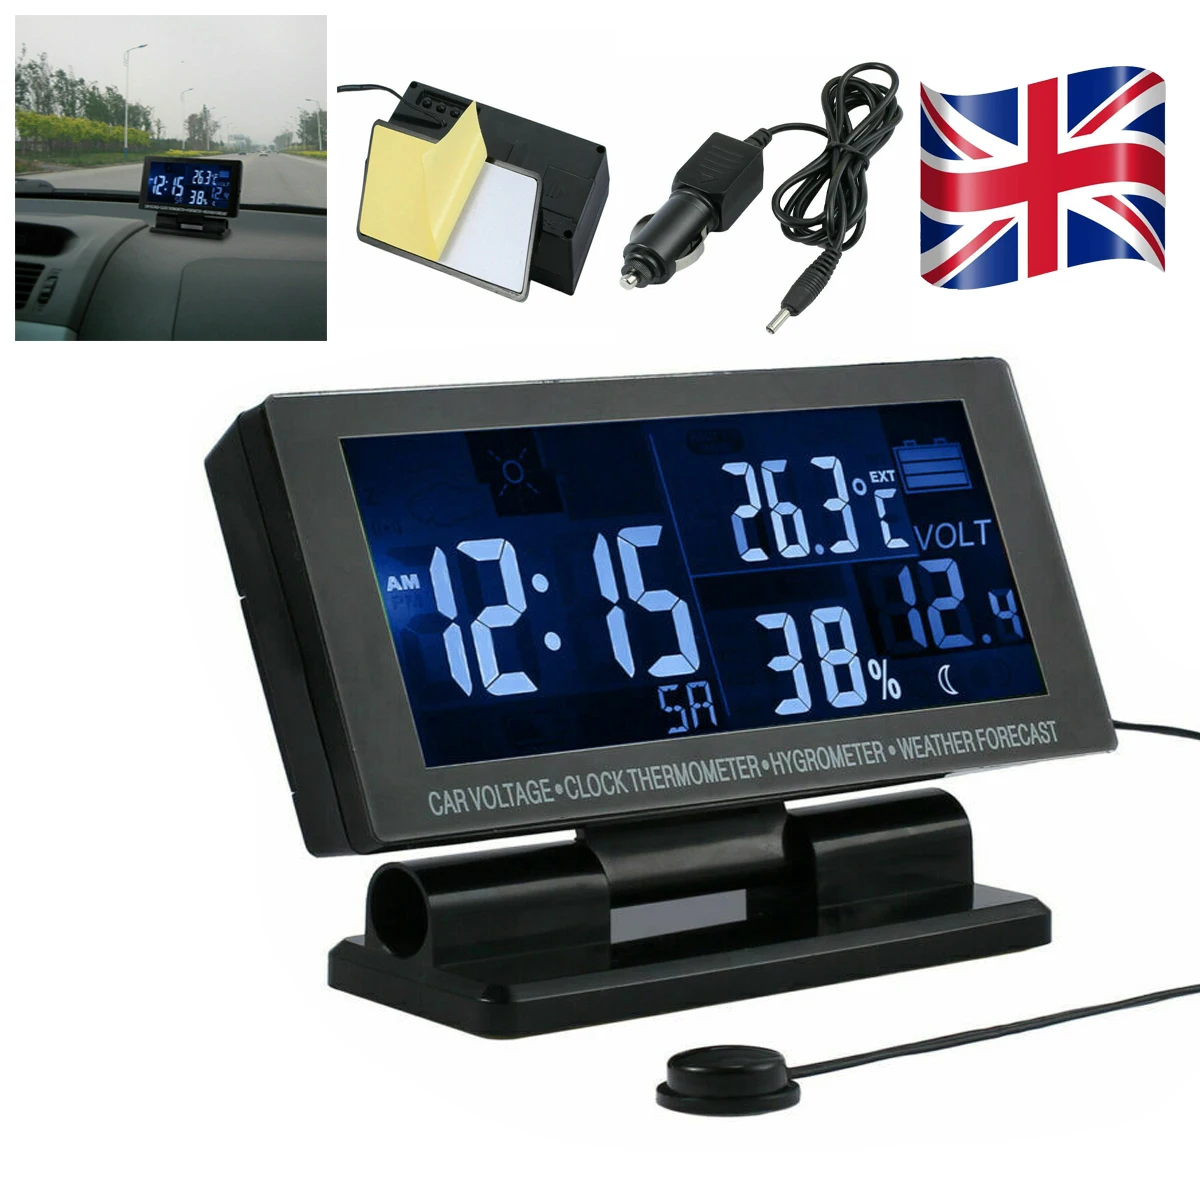 LCD Screen Digital Clock Car Voltmeter Thermometer Hygrometer Weather Forecast 